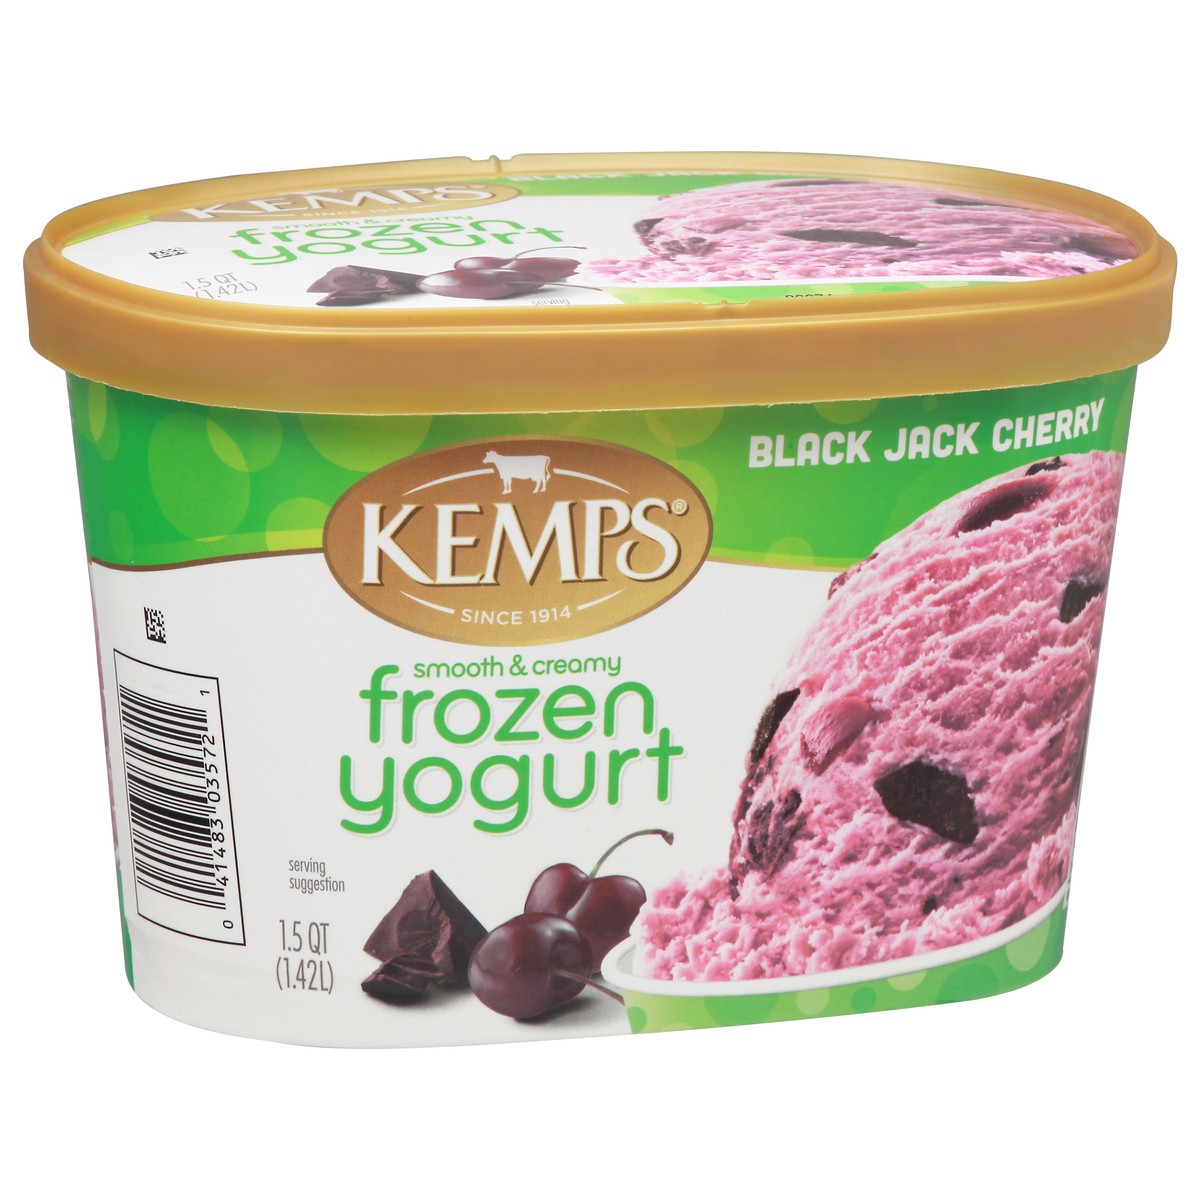 slide 7 of 13, Kemps Black Jack Cherry Low Fat Smooth & Creamy Frozen Yoghurt, 1.5 qt